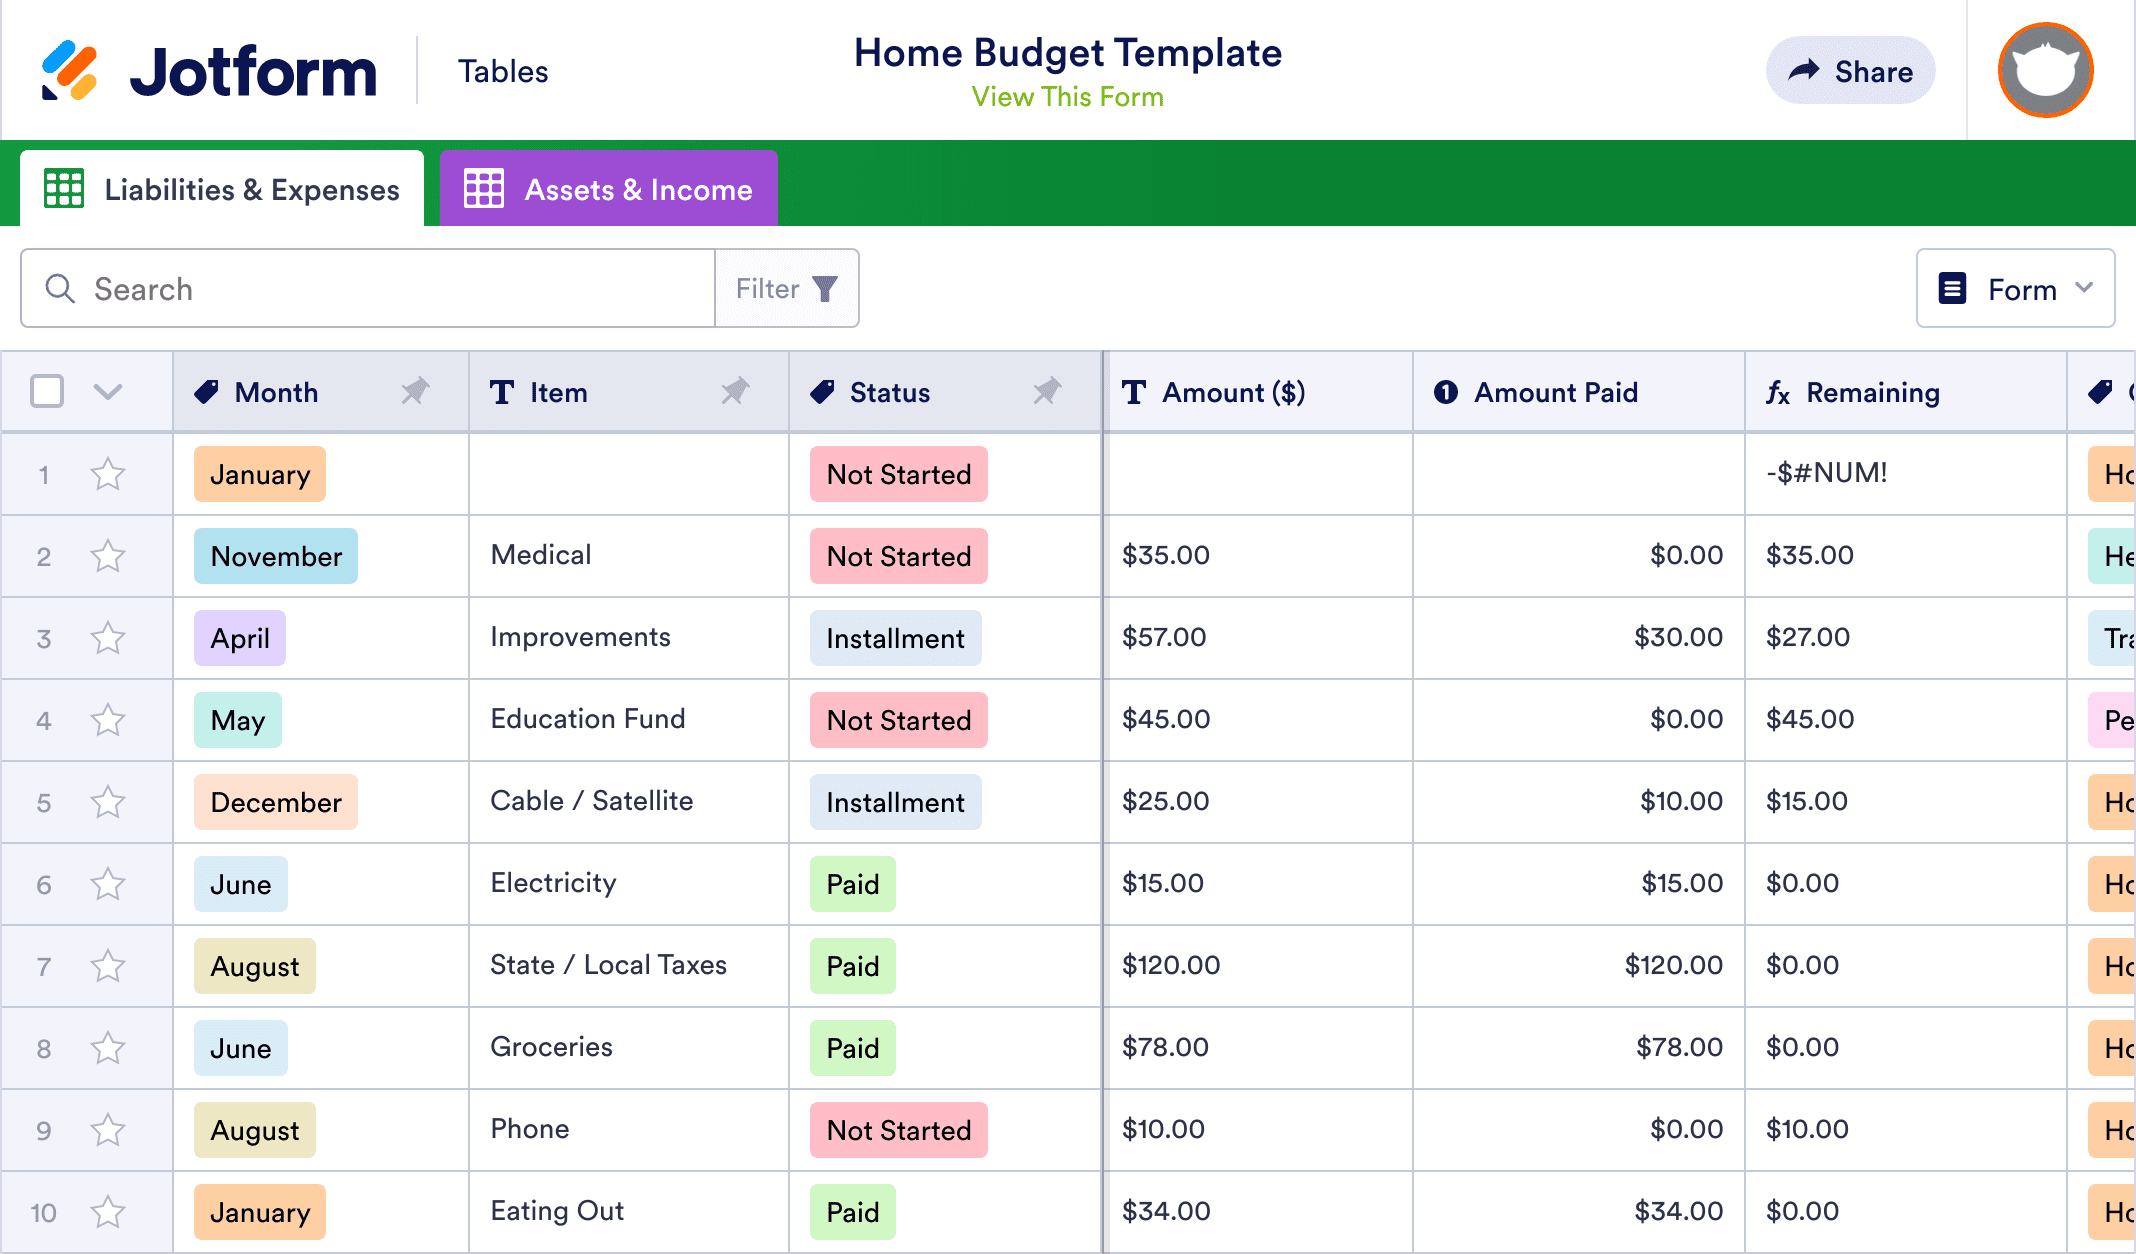 Home Budget Template